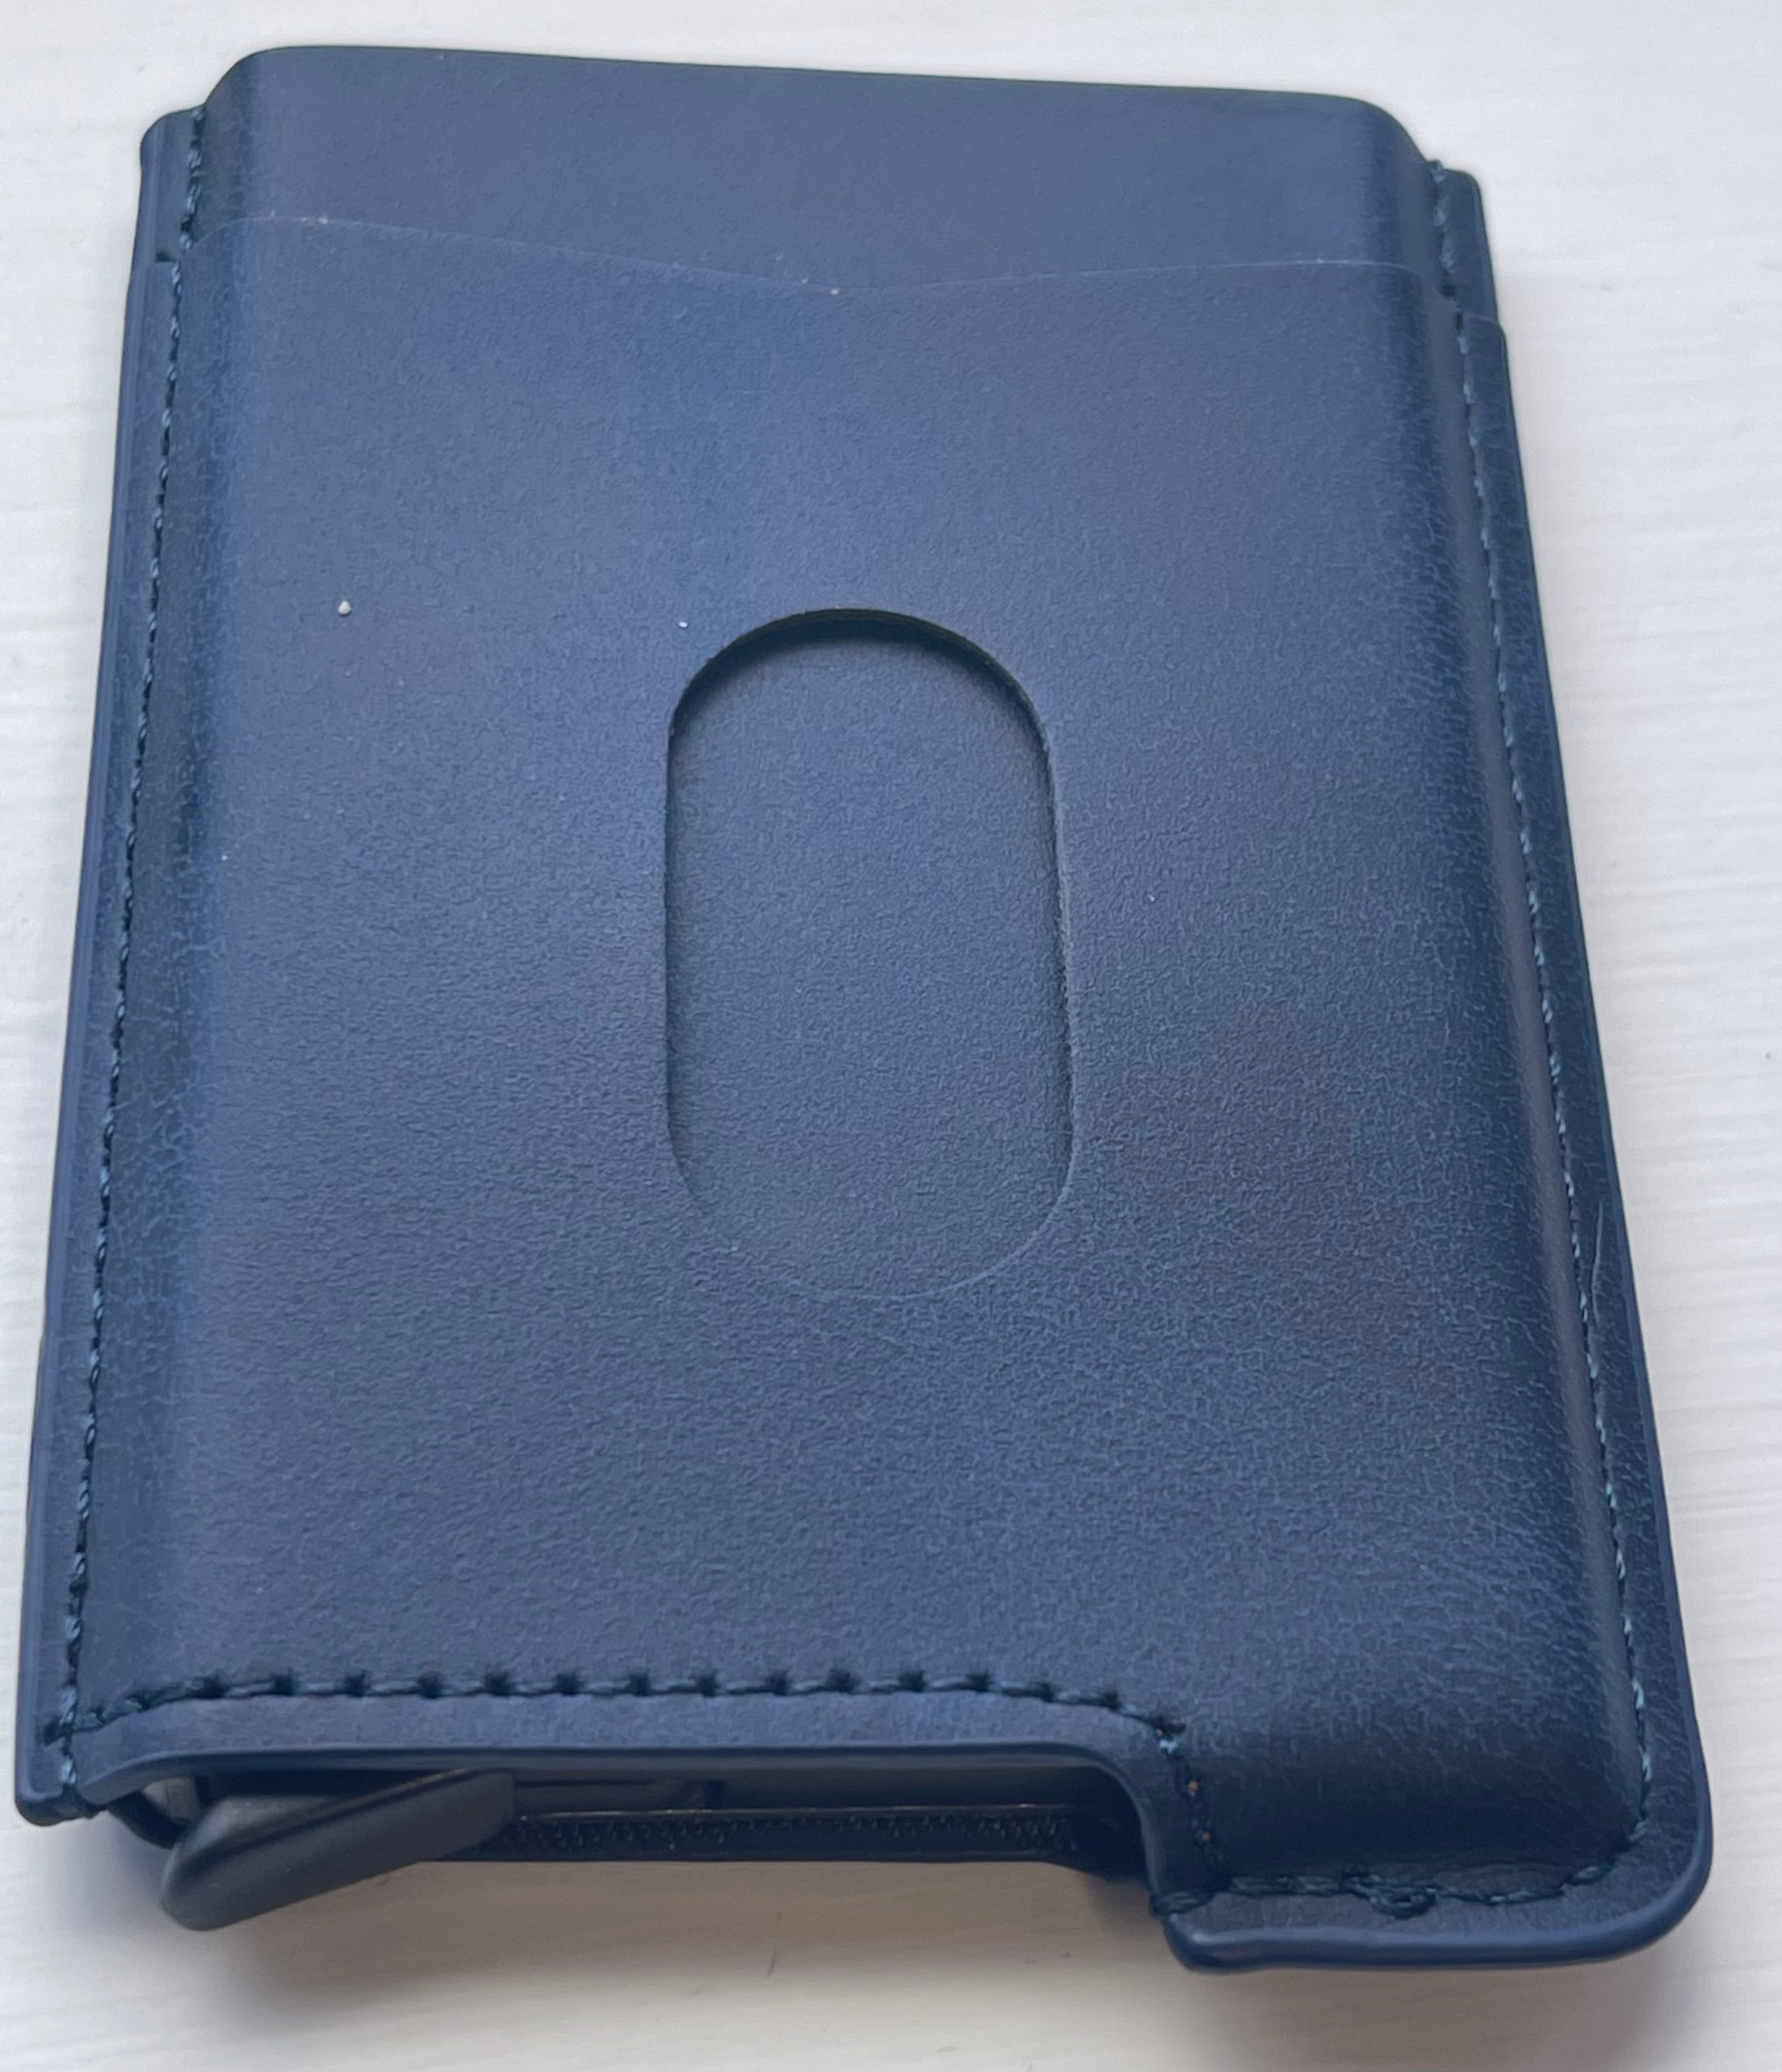 Nalayn branded luxury slimline Leather Credit Card Case Wallet